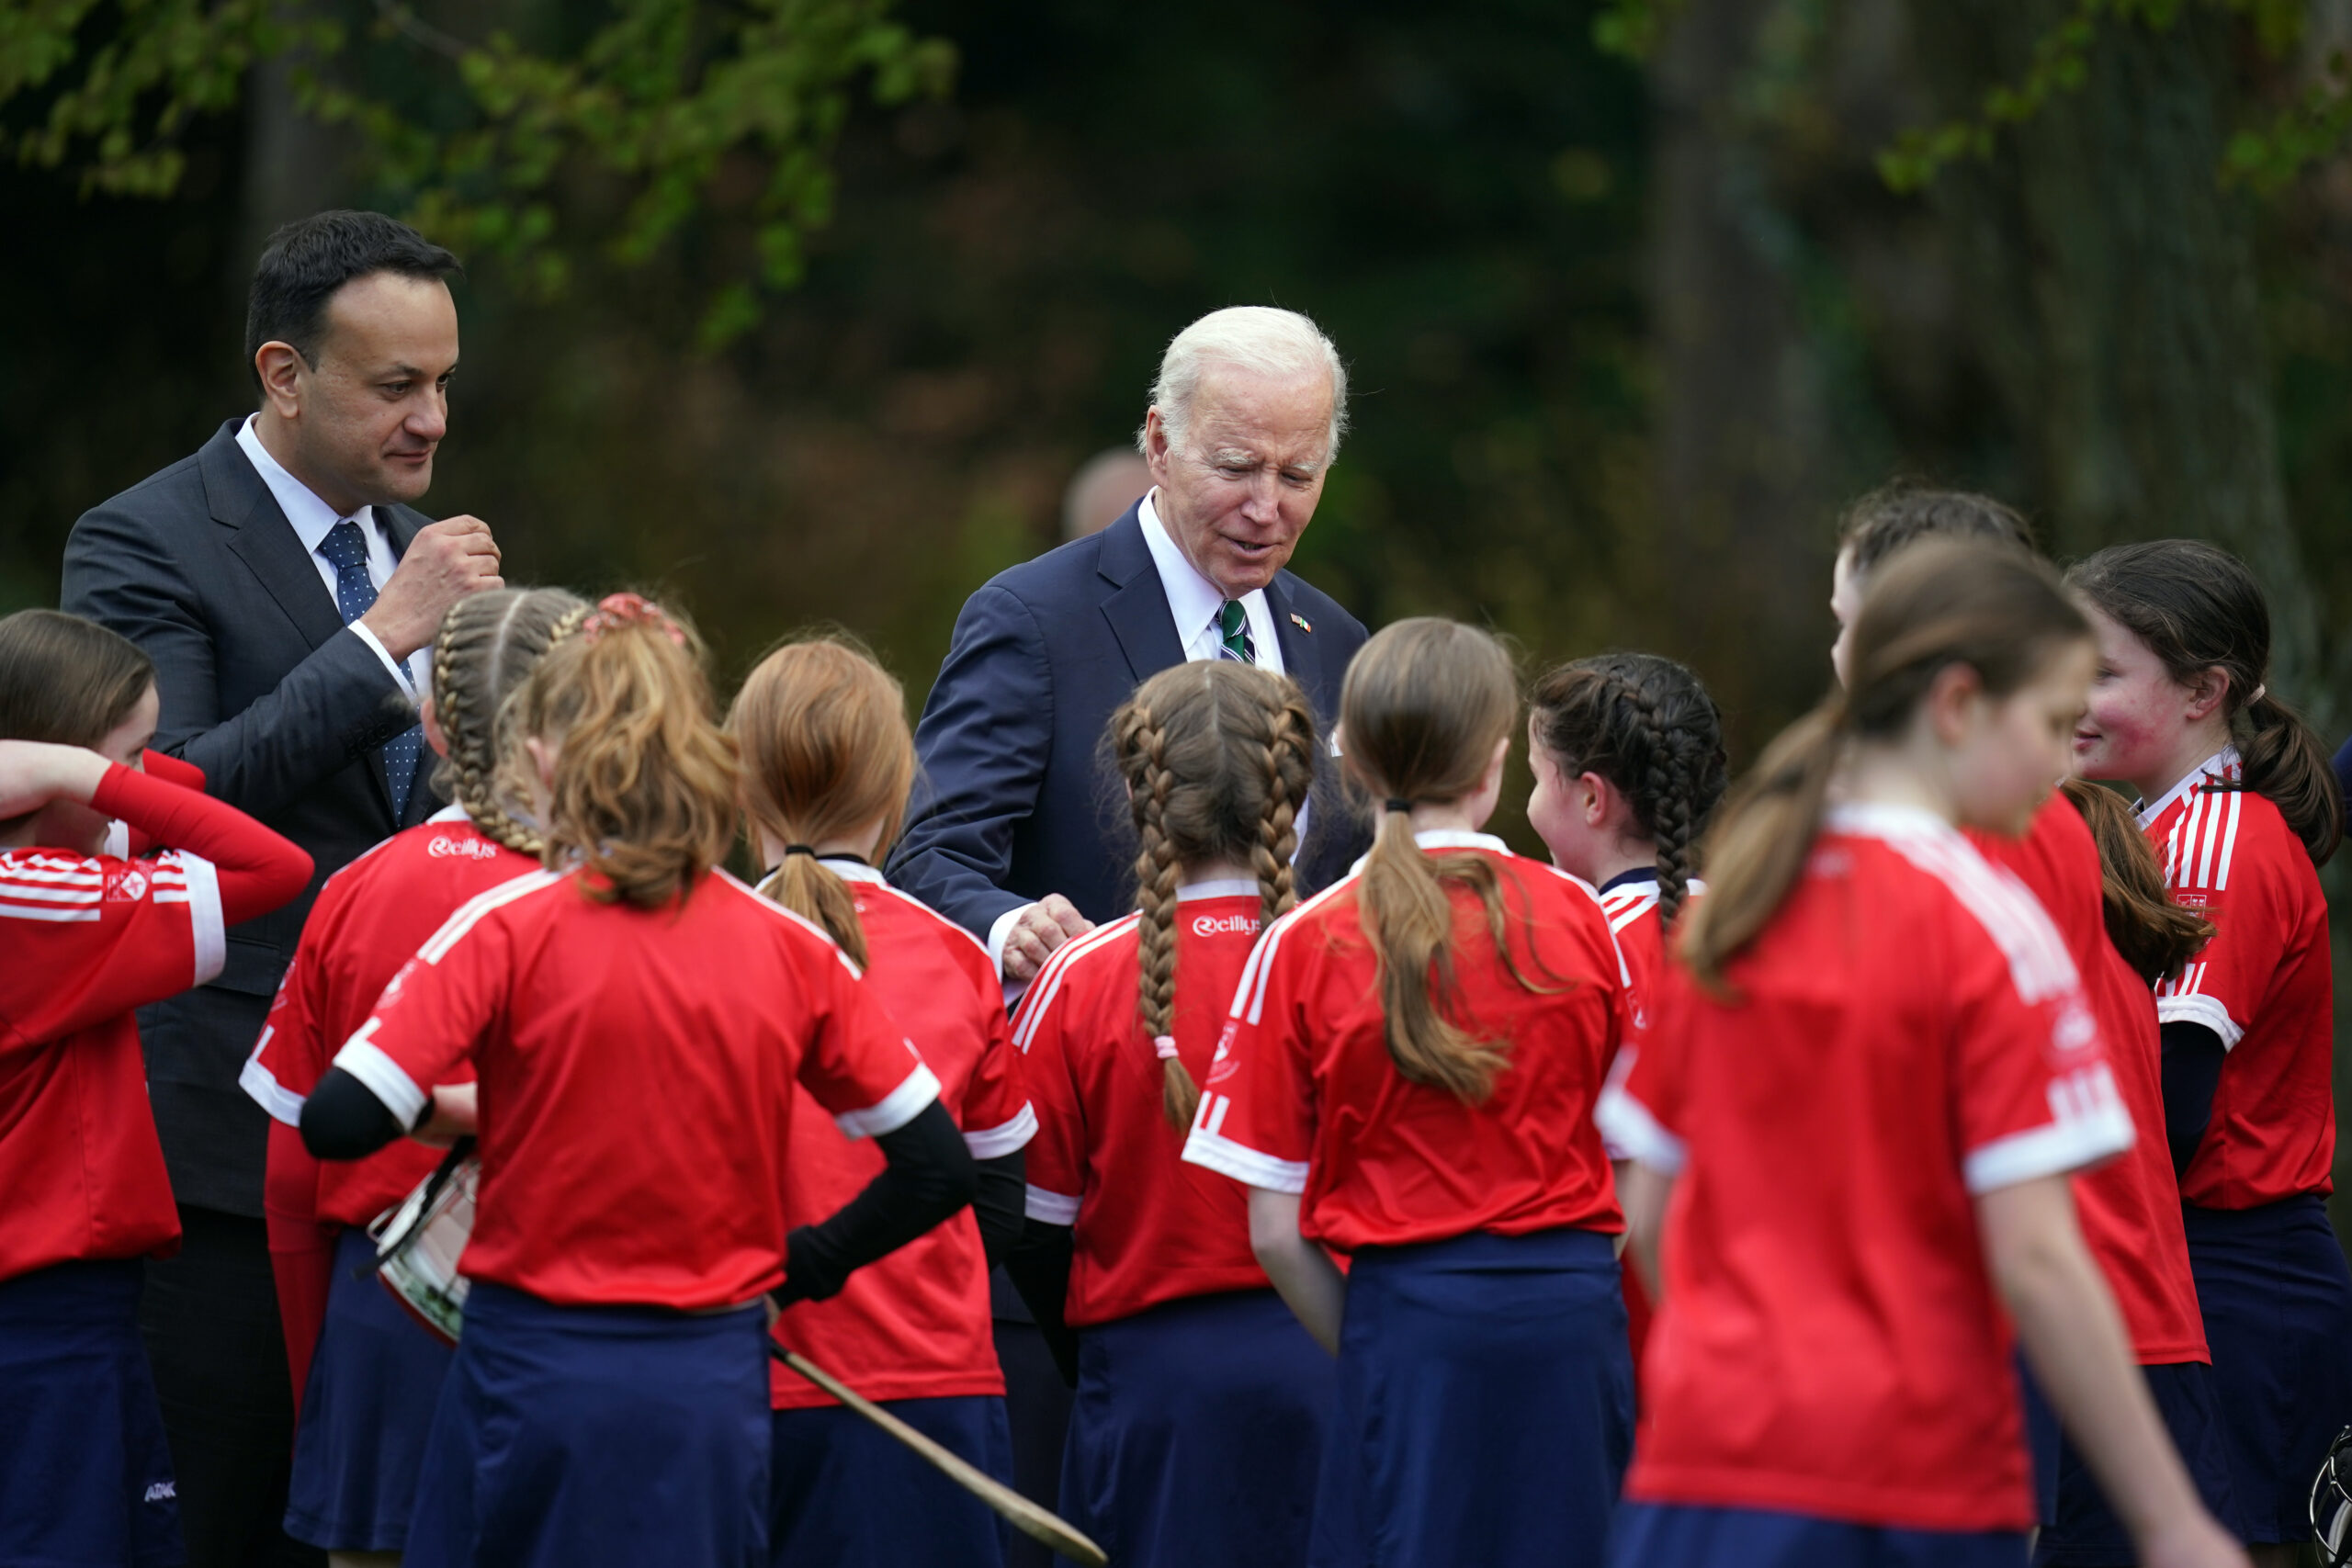 WATCH: Near Miss As Ball Whizzes By Biden’s Head During Irish Girls’ Camogie Match